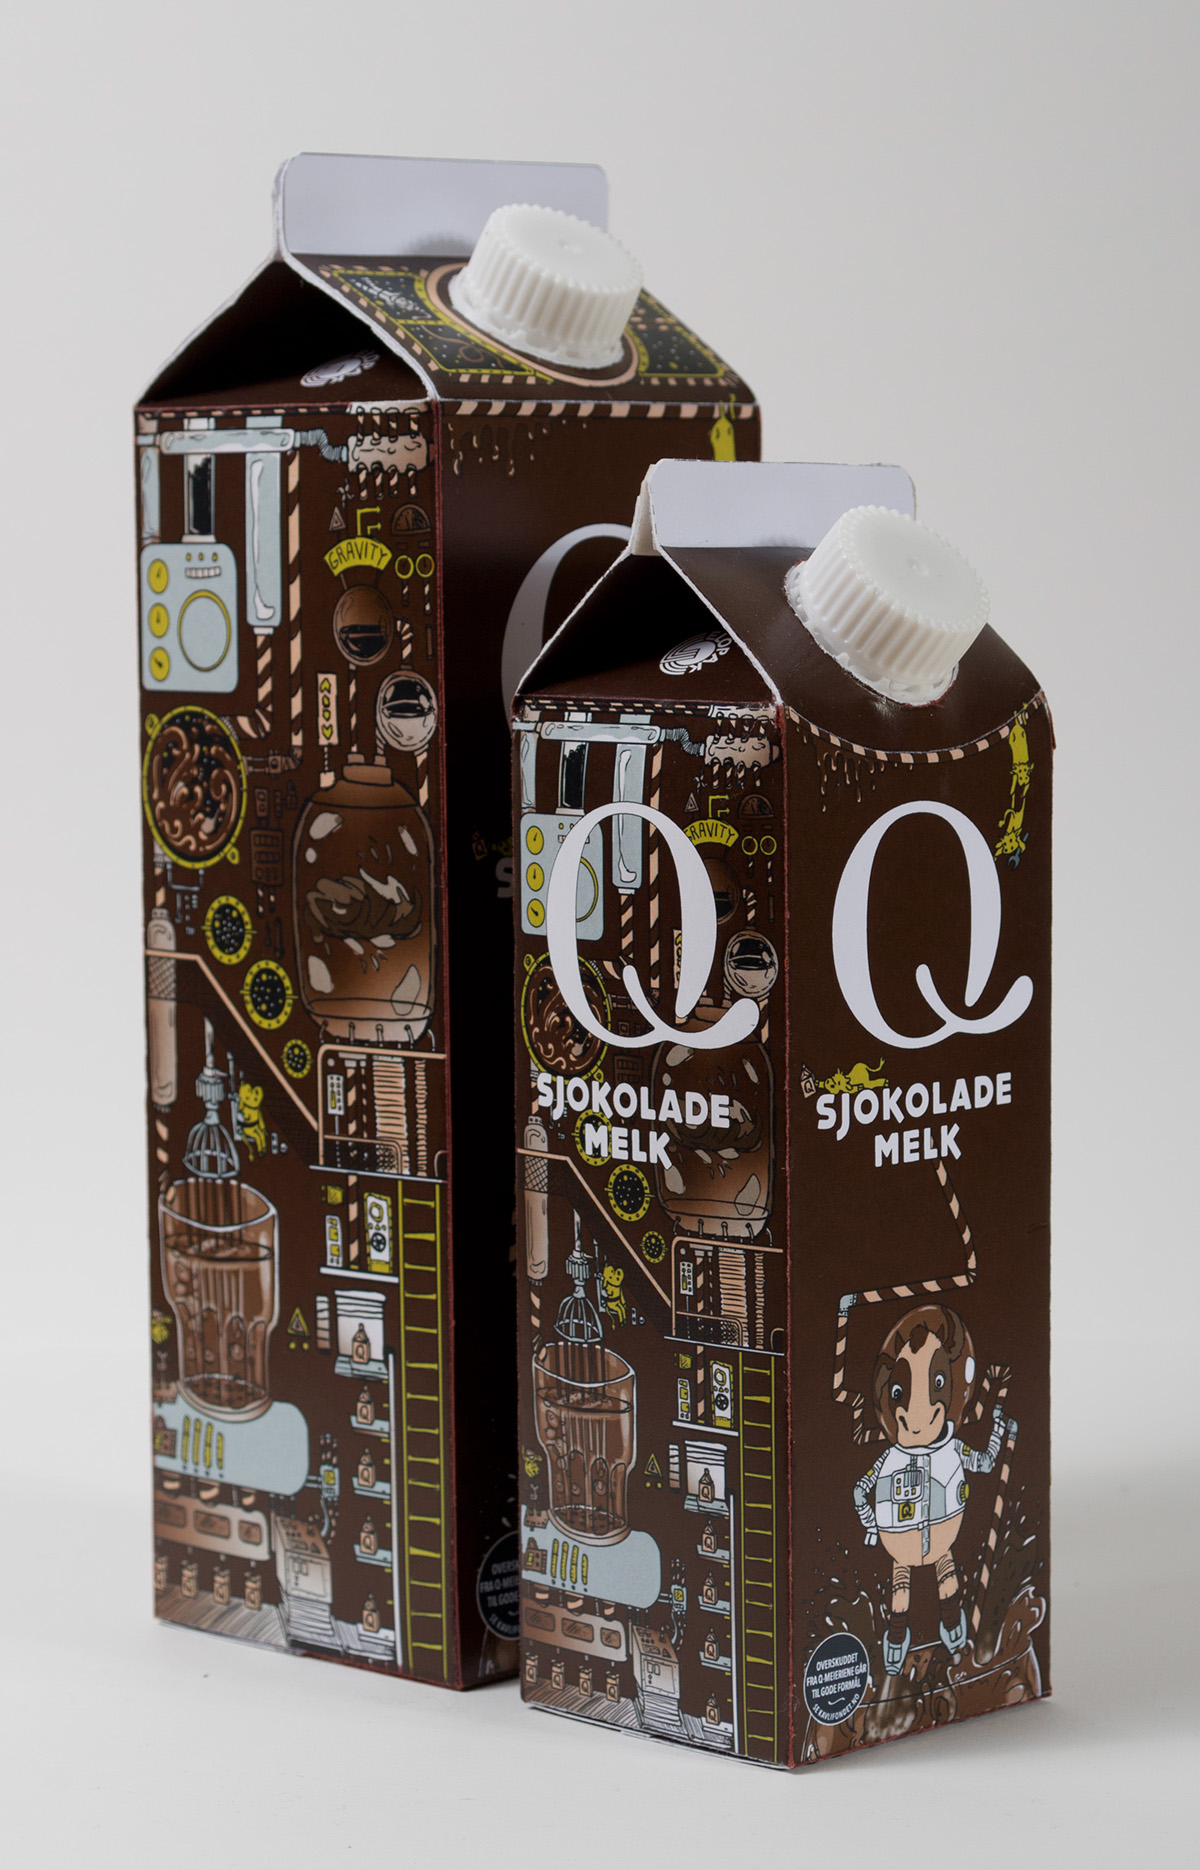 chocolate milk chocolate milk kartong   melk sjokolademelk   NKF norges kreative fagskole oslo Norge norway nkh norges kreative høyskole